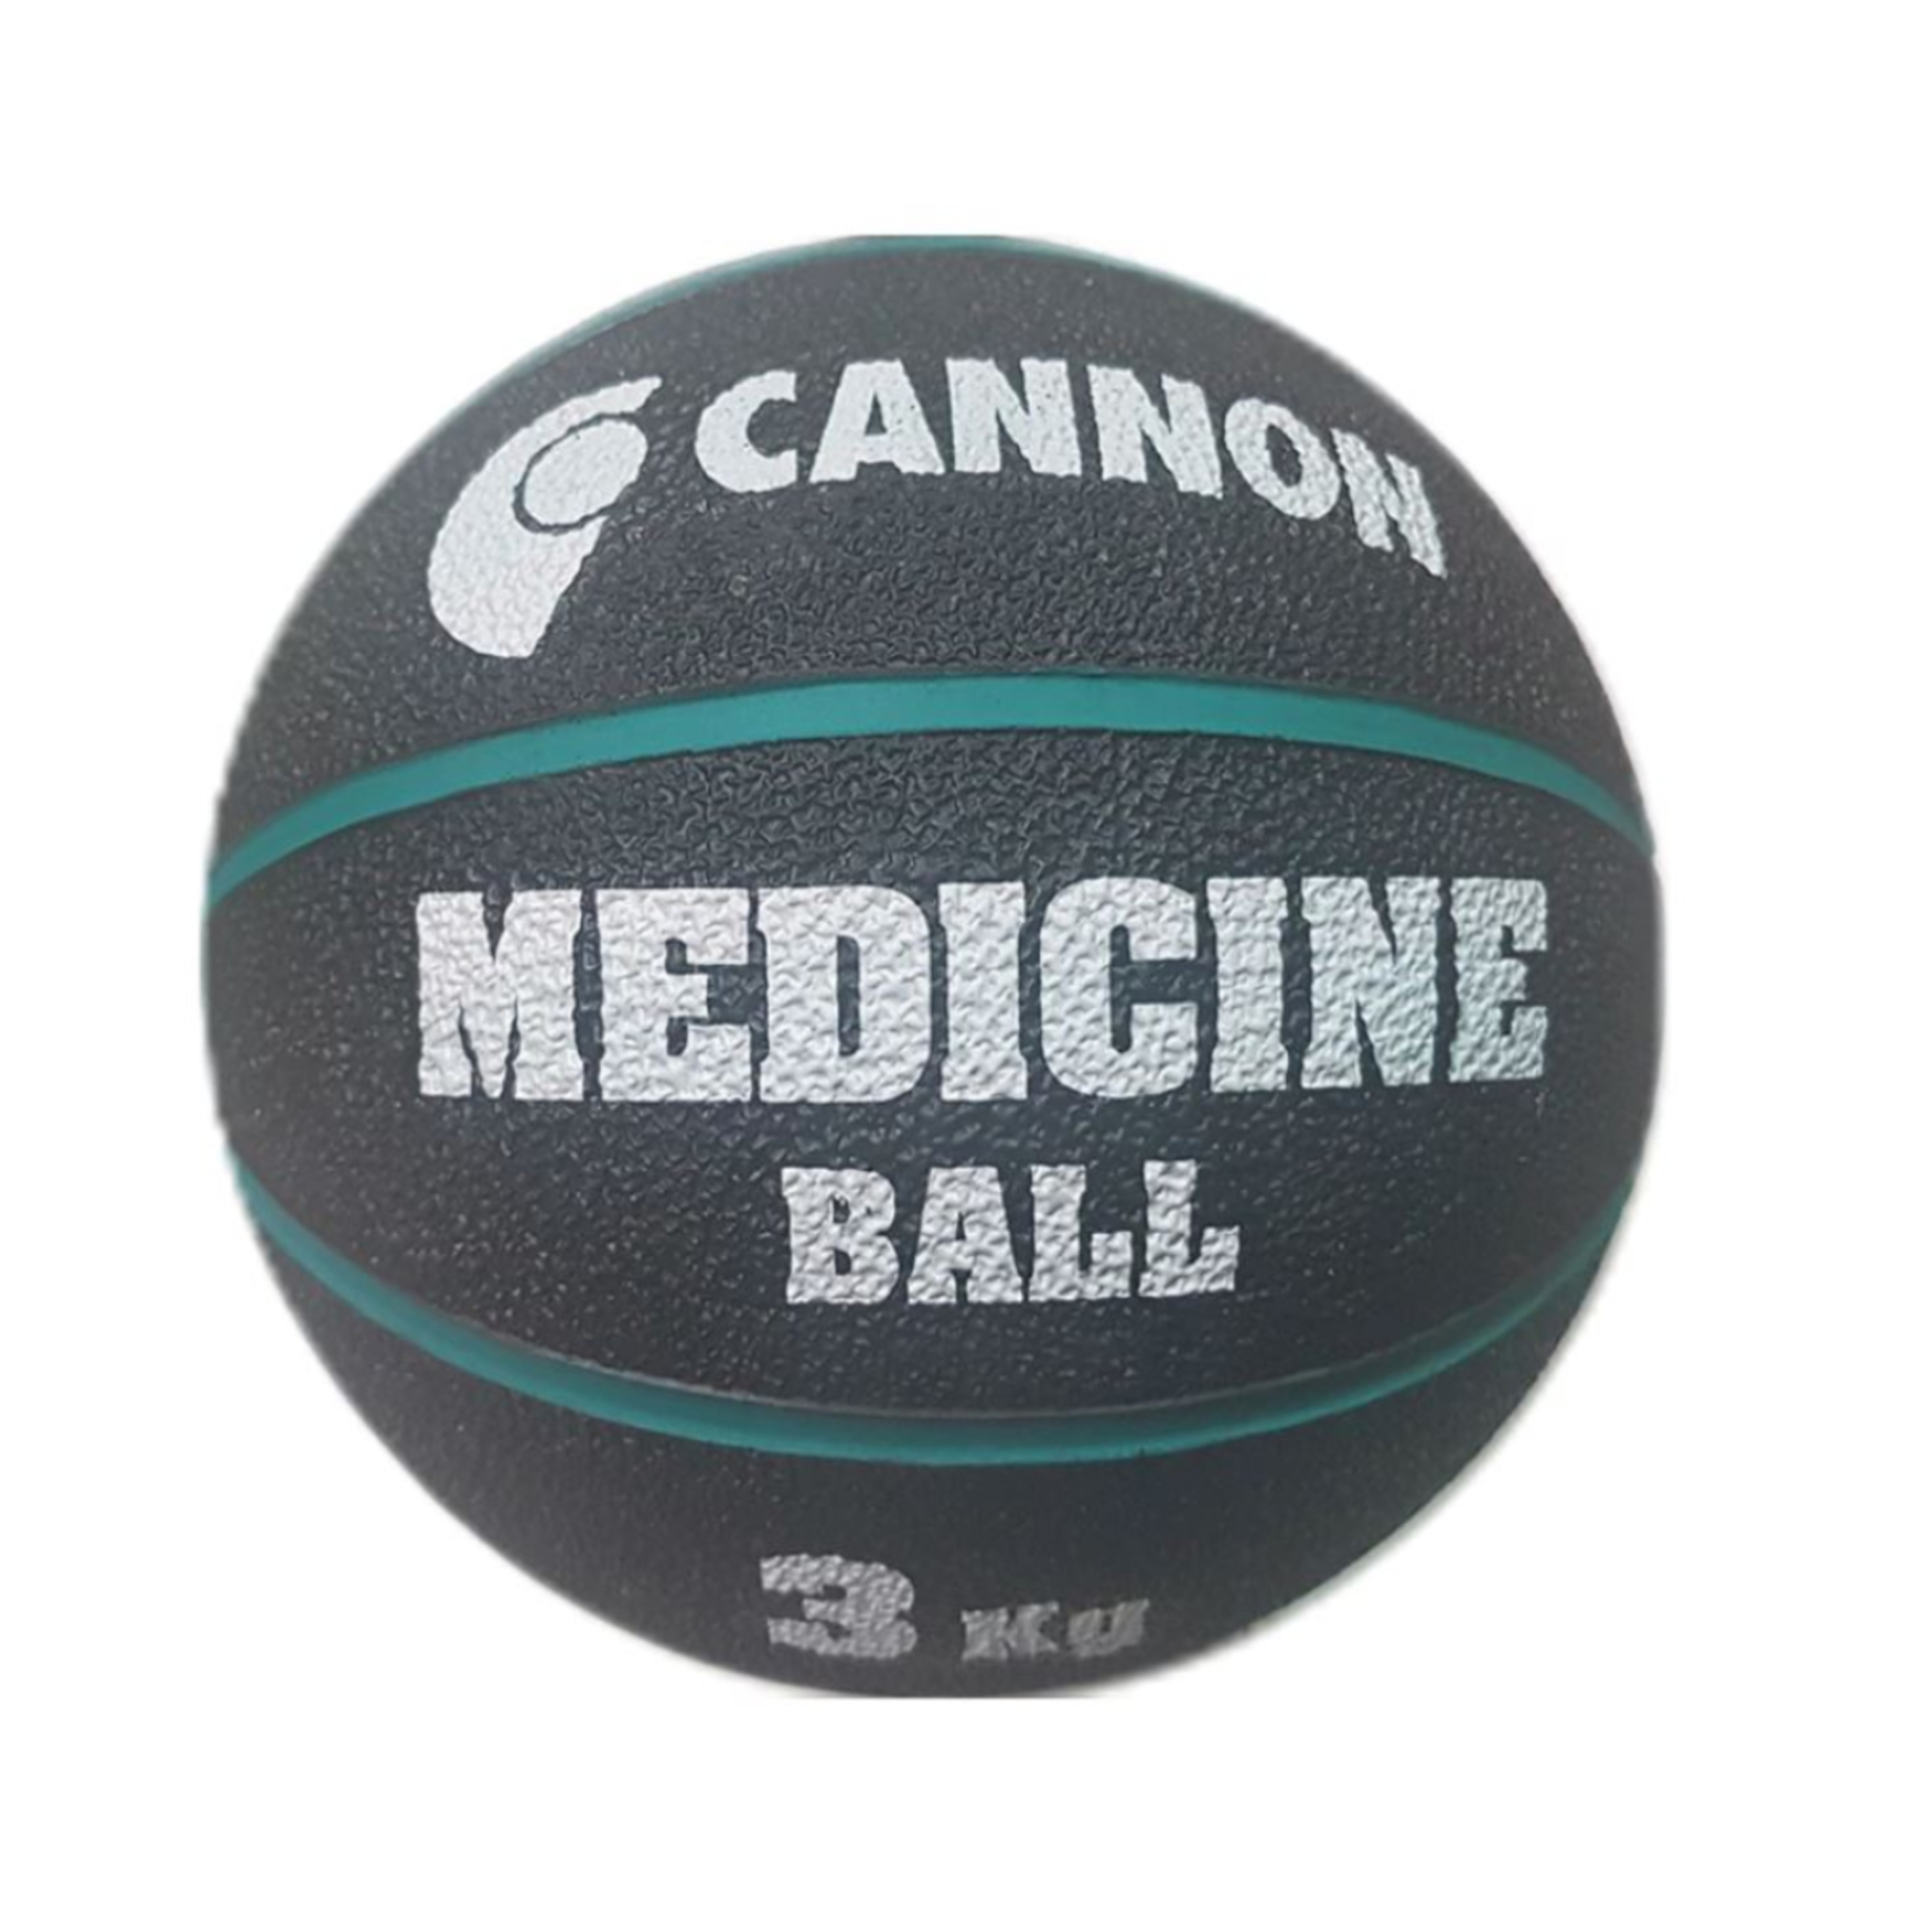 Balon Medicinal Cannon 3 Kilos Sin Bote - negro-verde - 